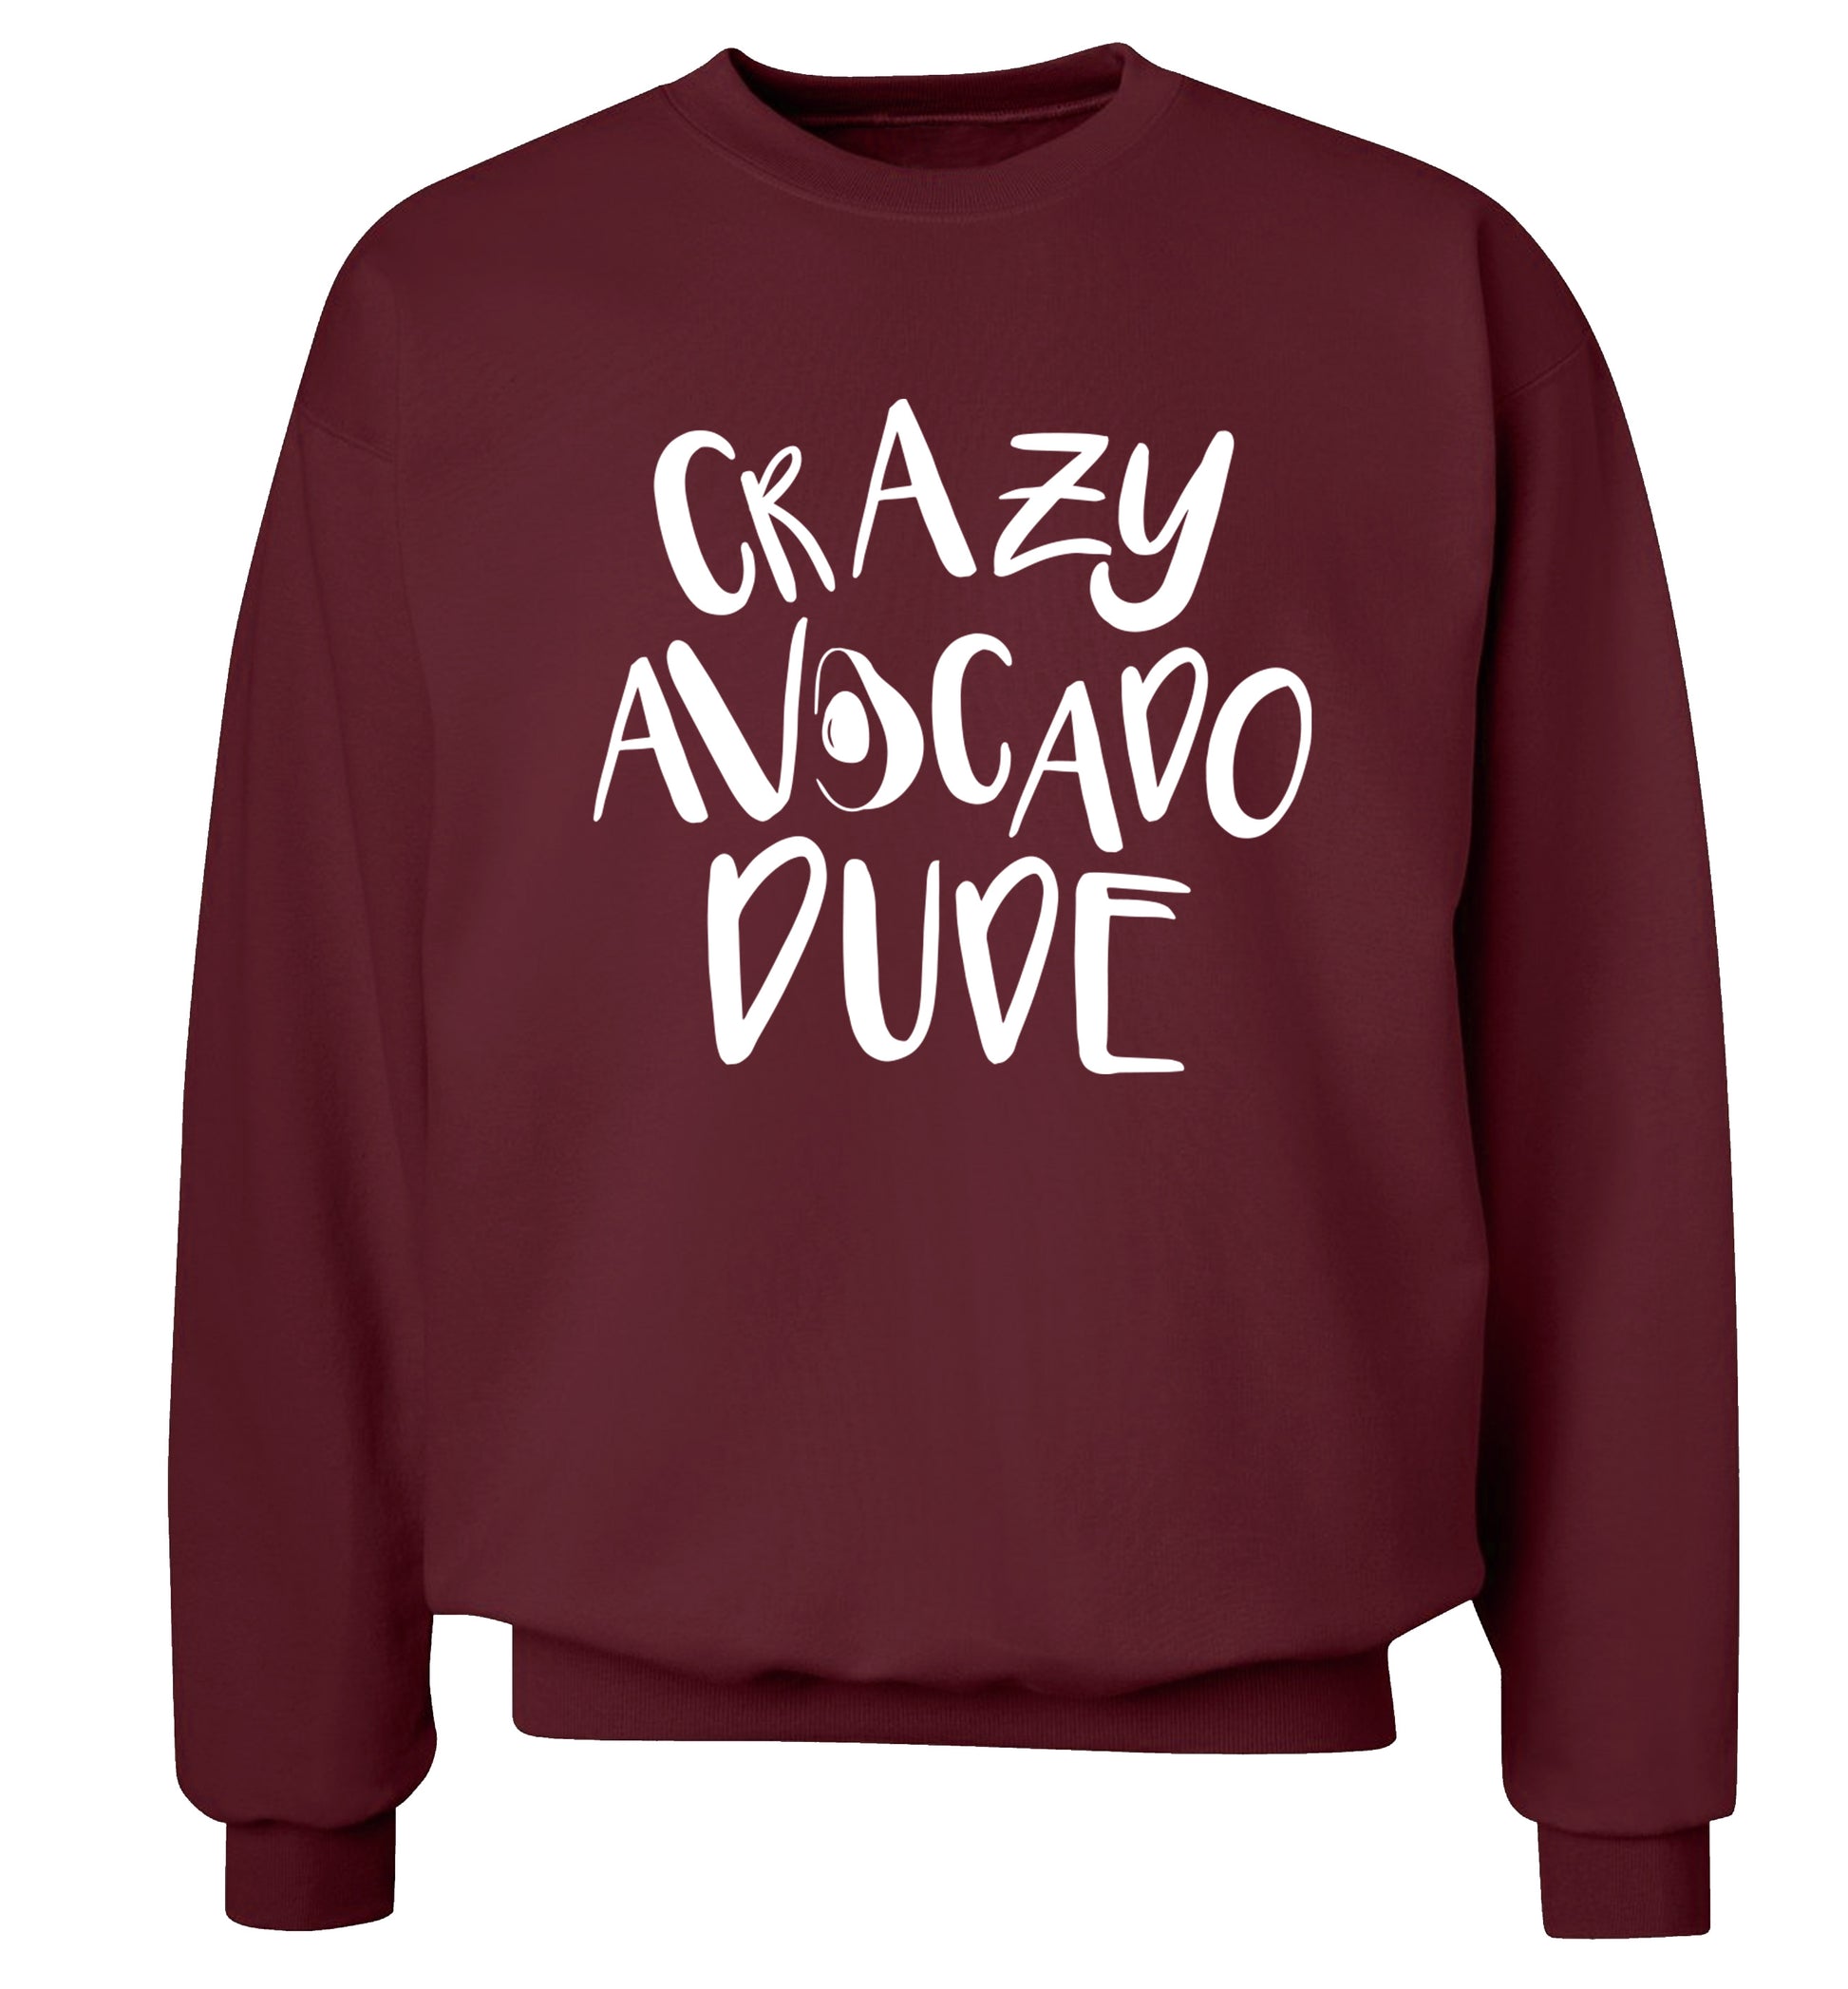 Crazy avocado dude Adult's unisex maroon Sweater 2XL